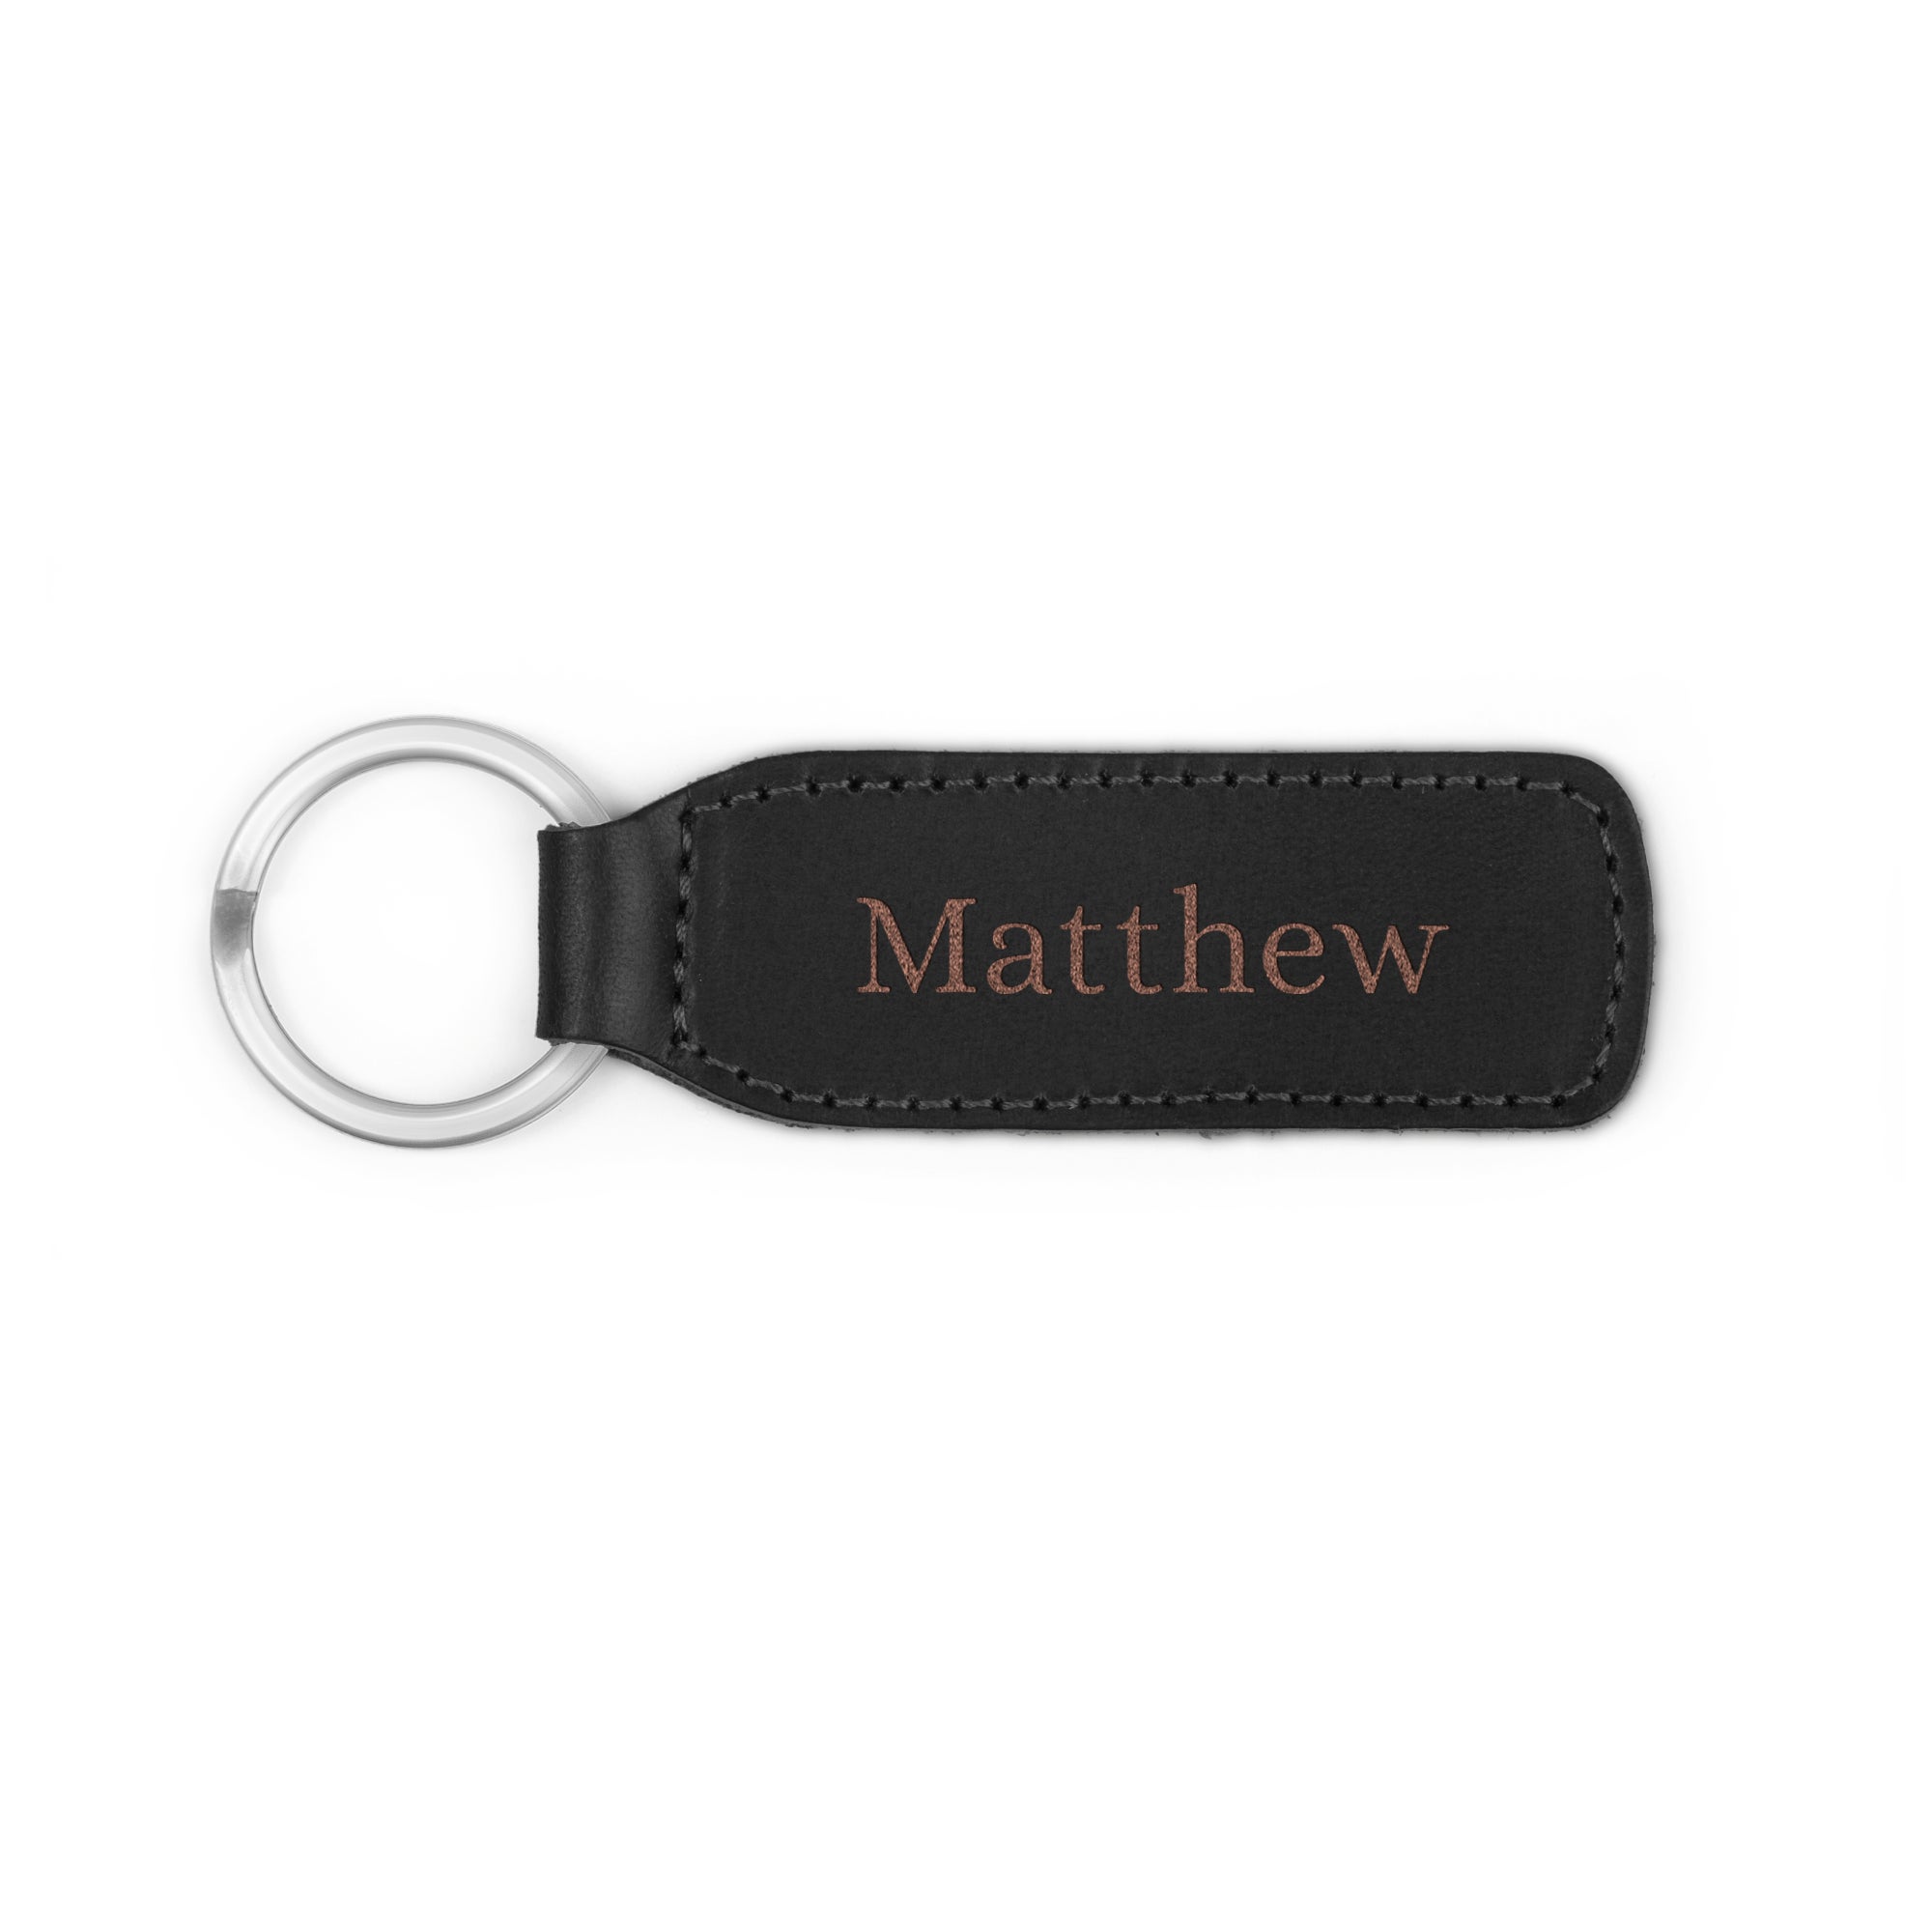 Personalised key ring - Leather - Black - Engraved